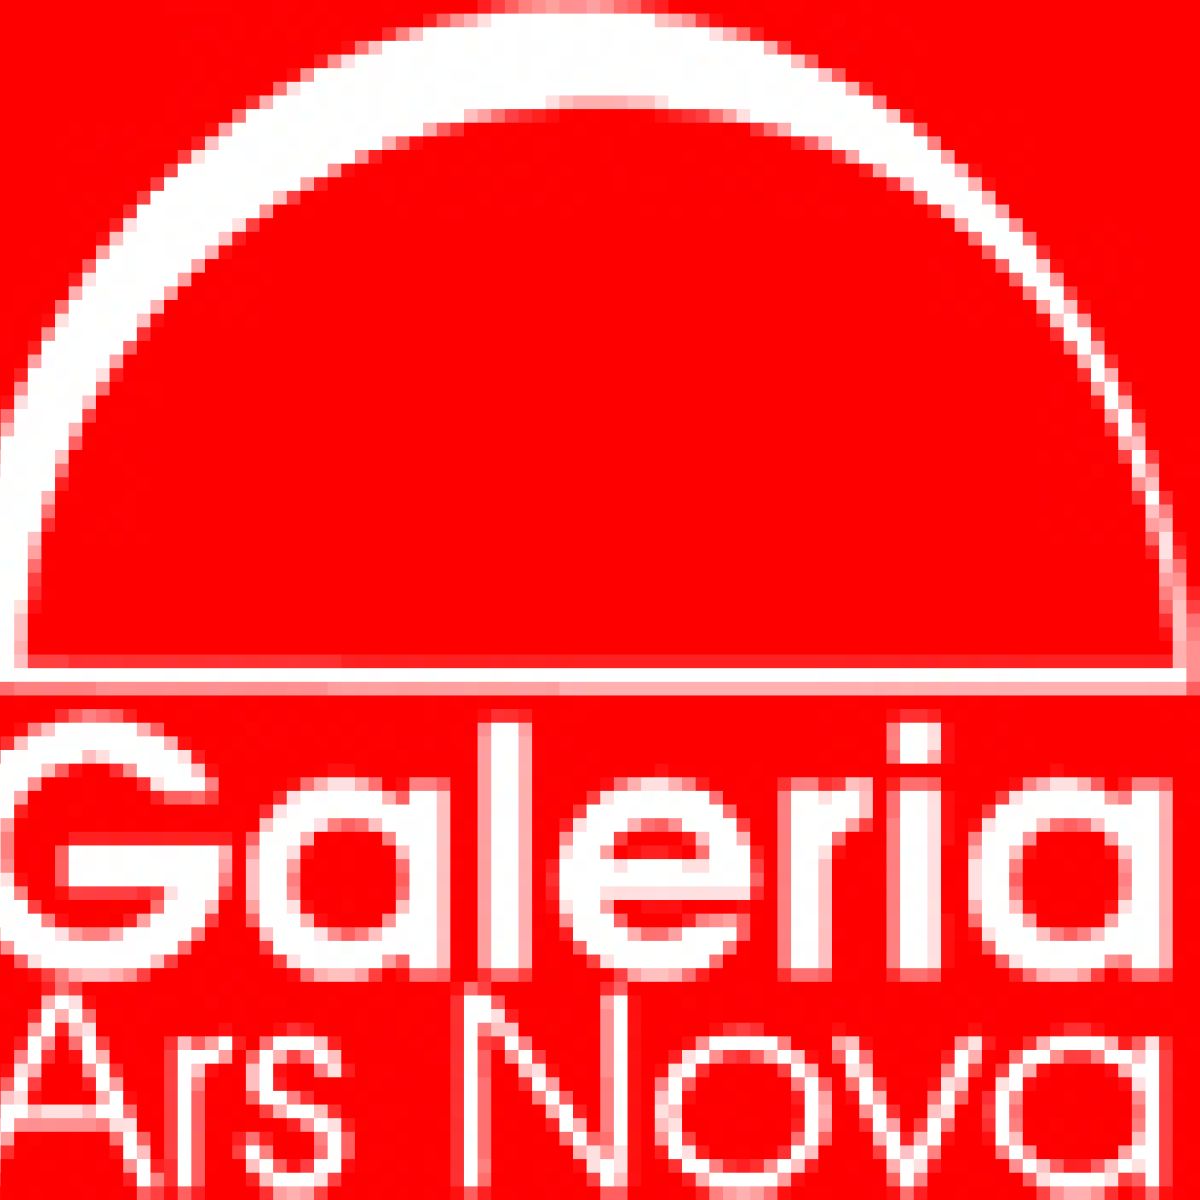 Ars Nova Galeria